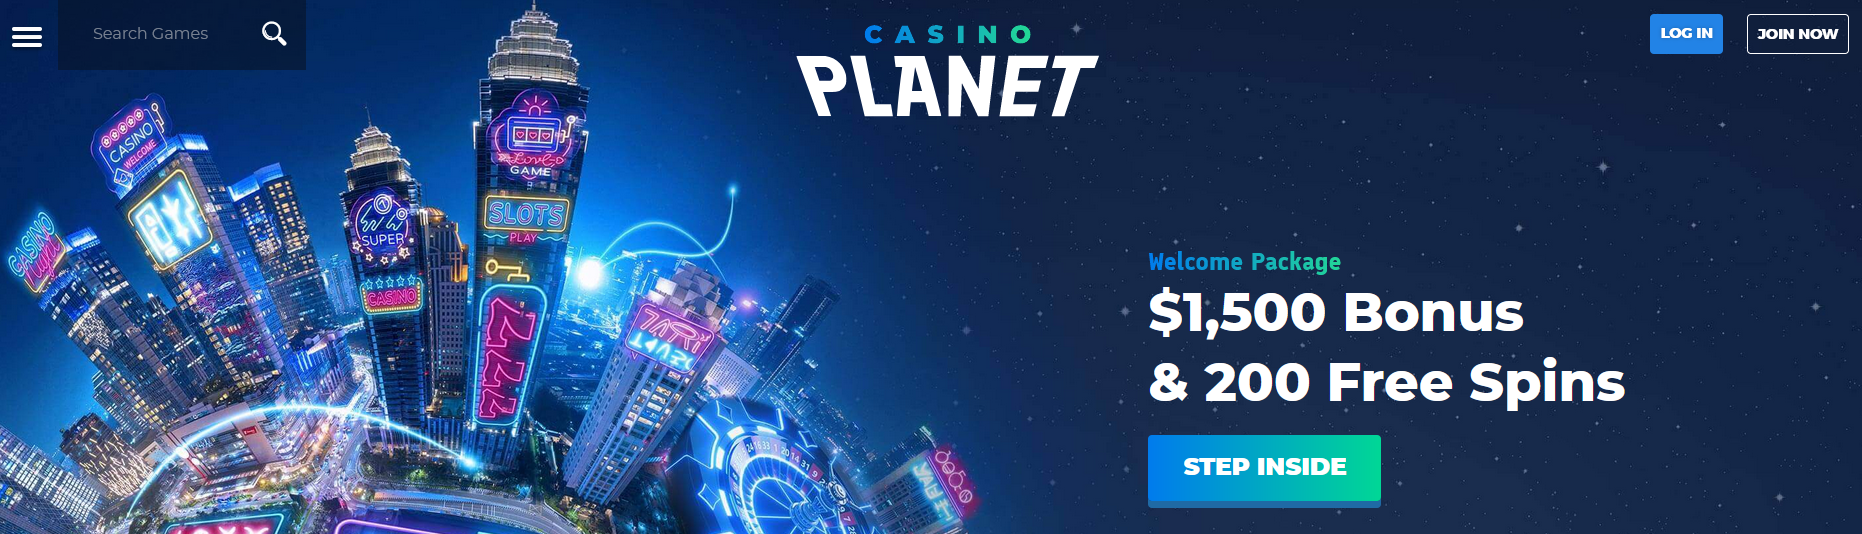 4 Bonus offers at Casinoplanet